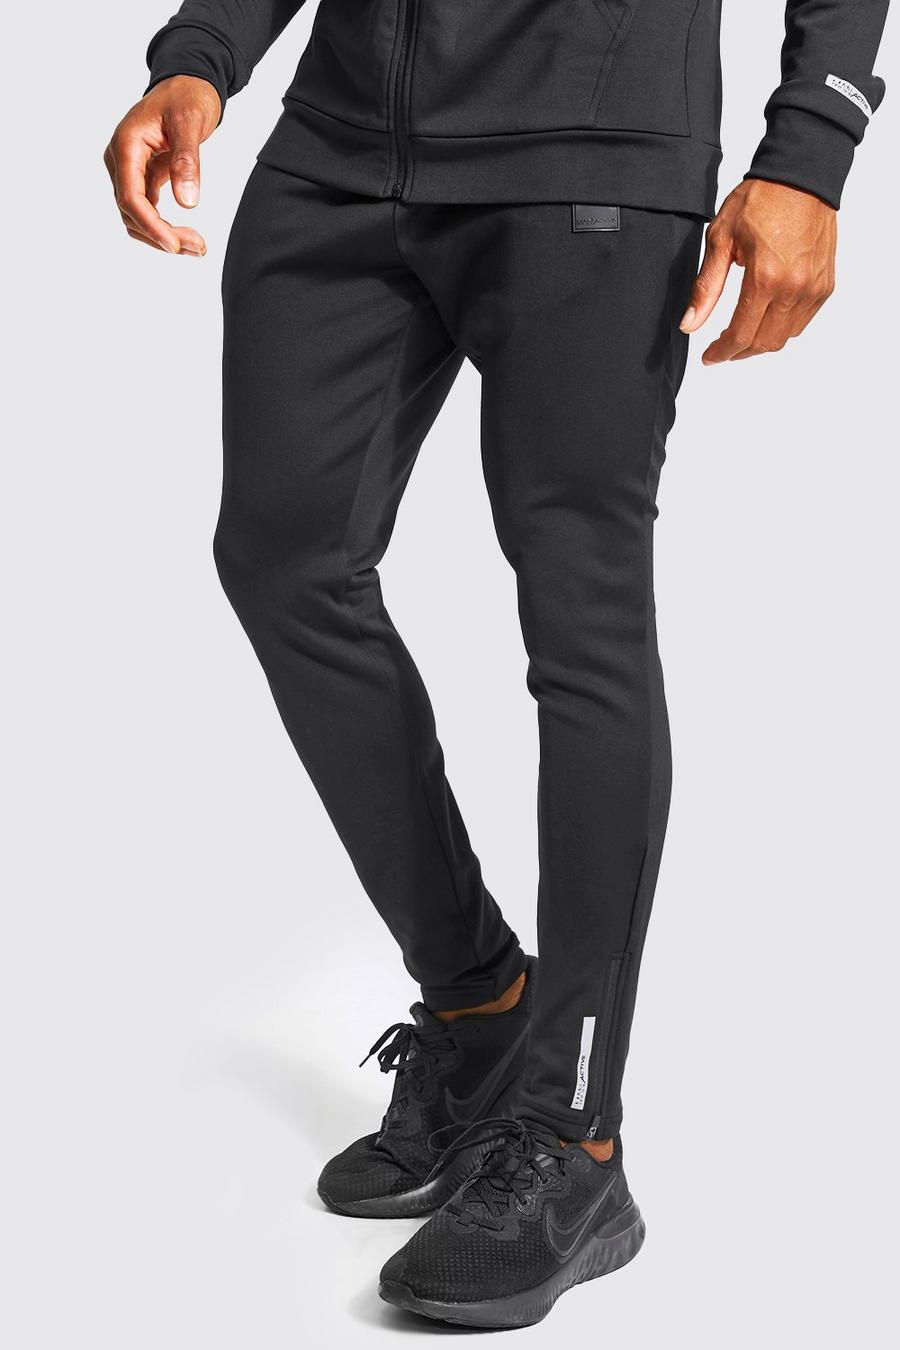 Pantaloni tuta Man Active per alta performance, Black negro image number 1